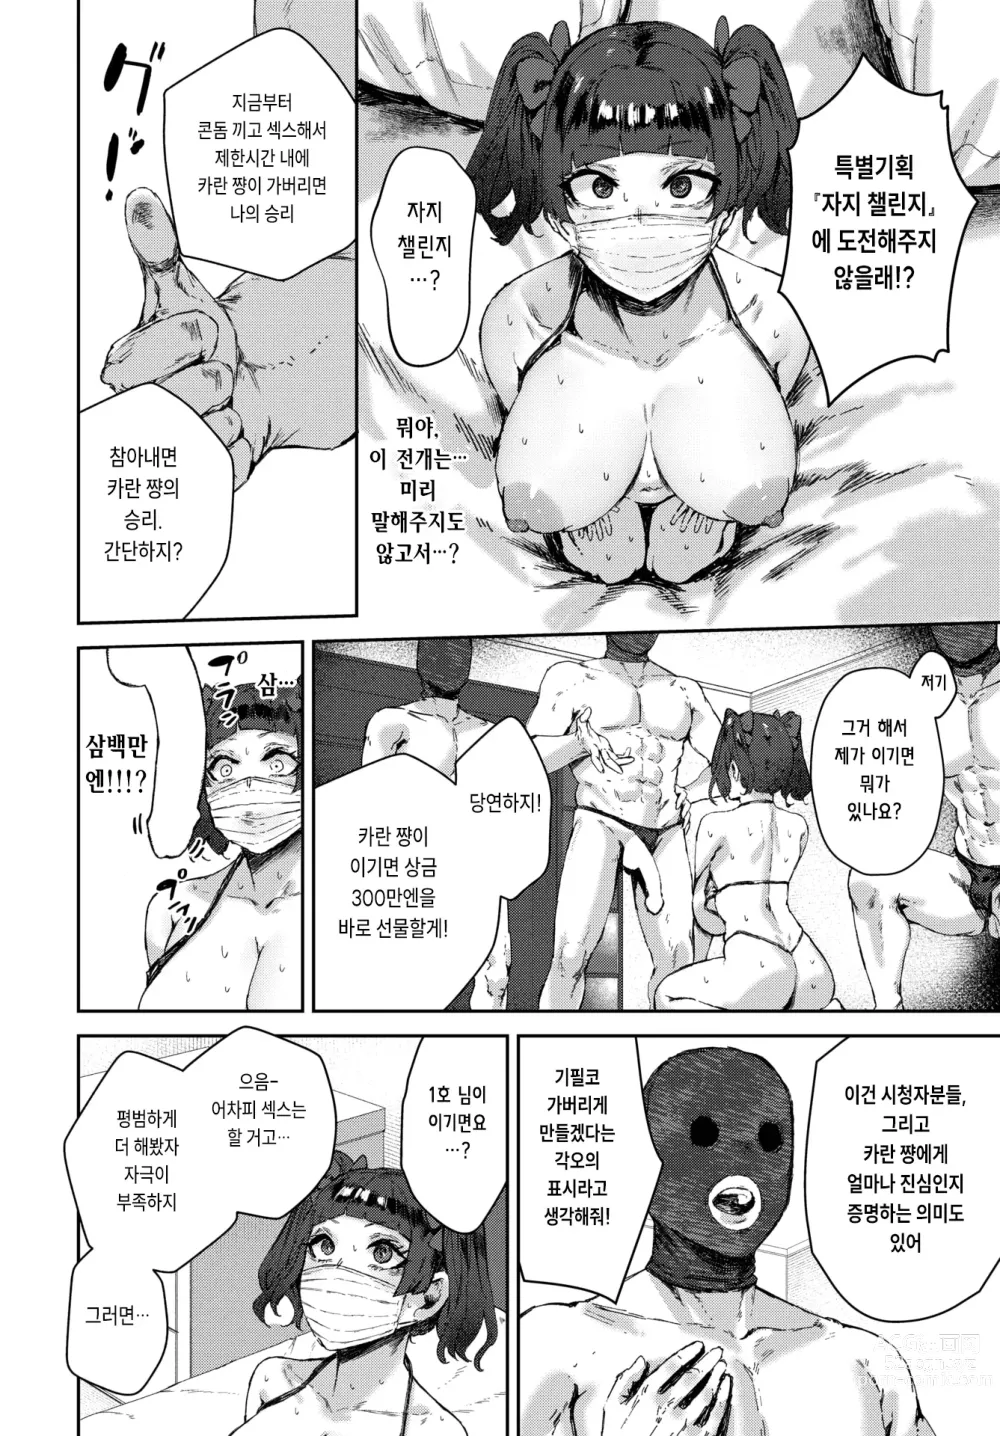 Page 10 of manga 「좋아」를 위해서면